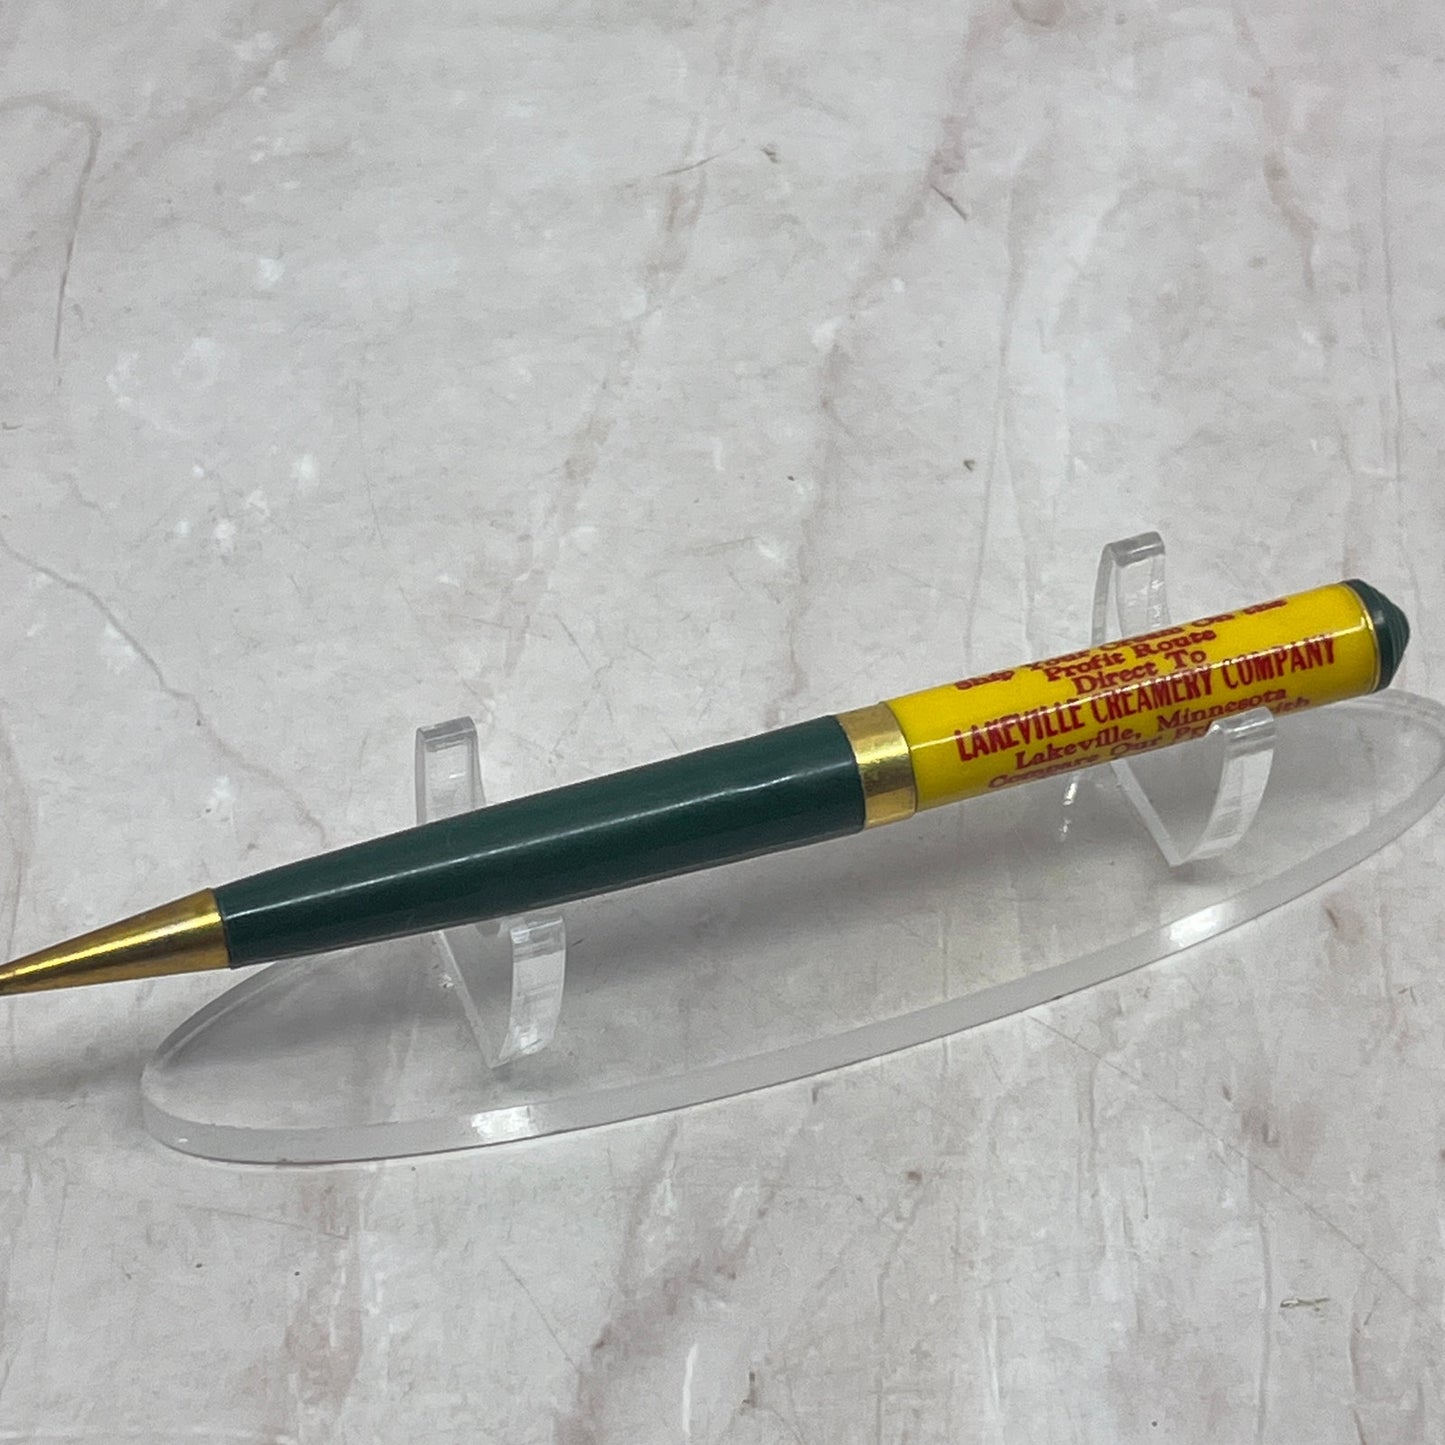 Readyrite Lakeville Creamery Company MN Vintage Mechanical Pencil SB8-Y1